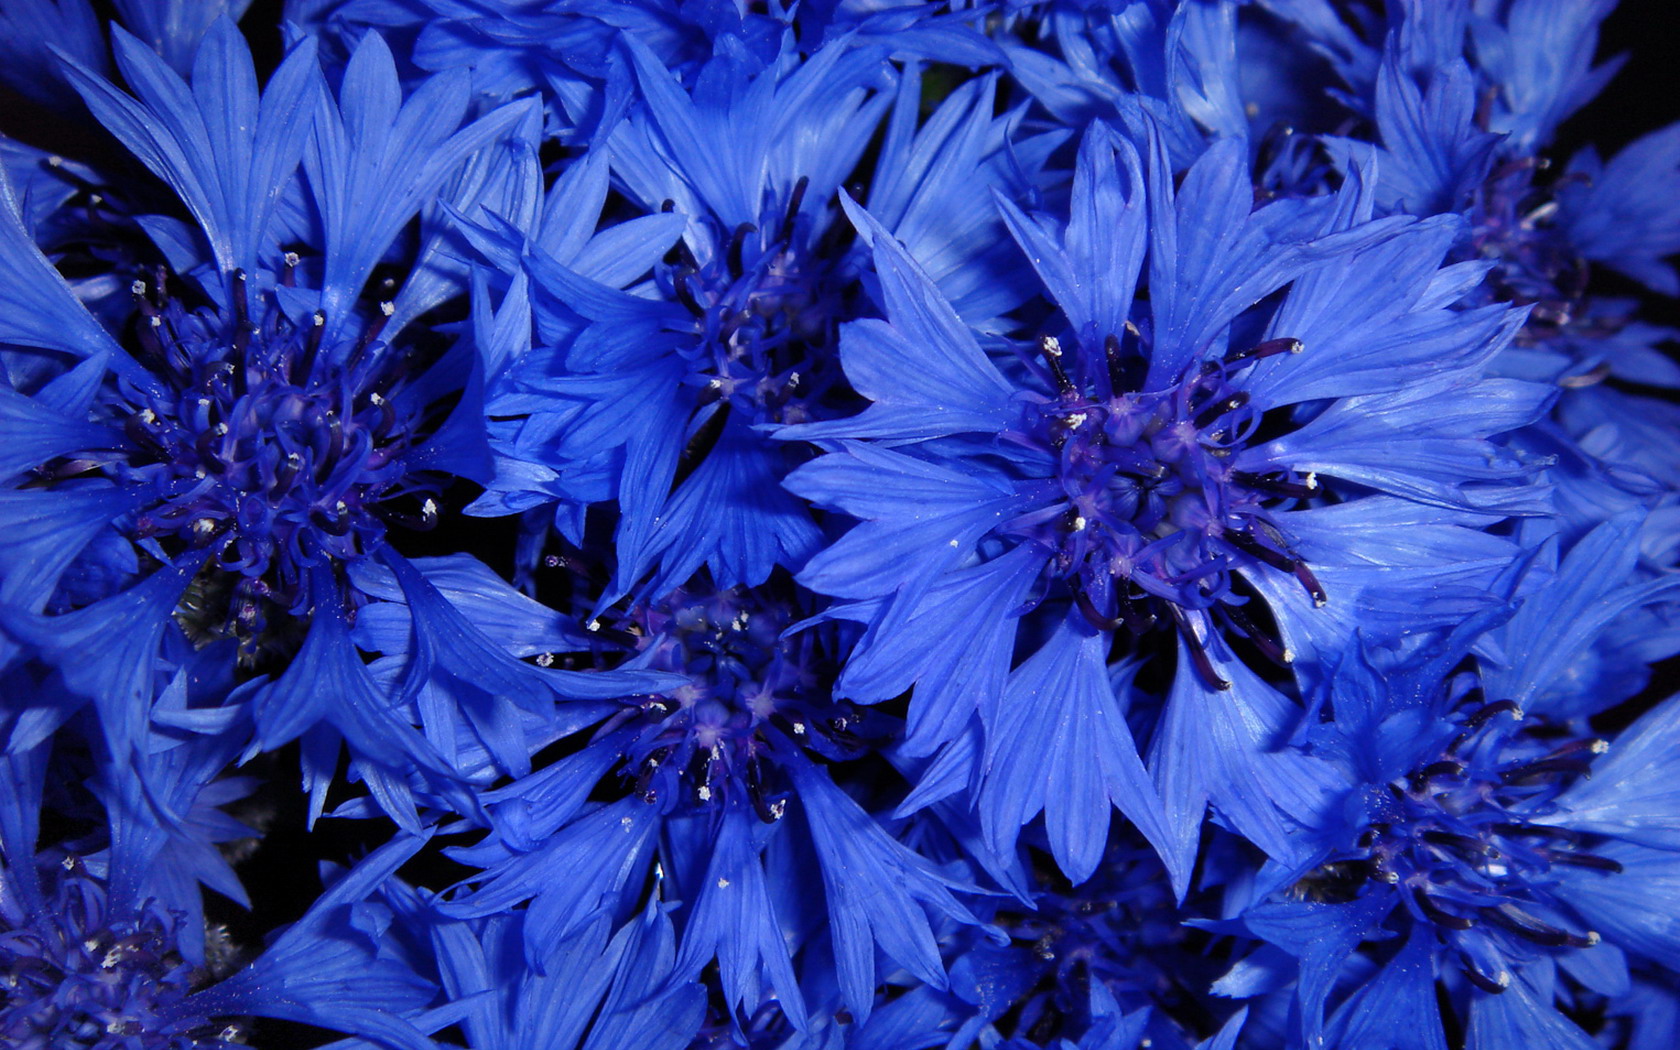 398676 descargar imagen tierra/naturaleza, florecimiento de maíz, flor azul, flor, flores: fondos de pantalla y protectores de pantalla gratis